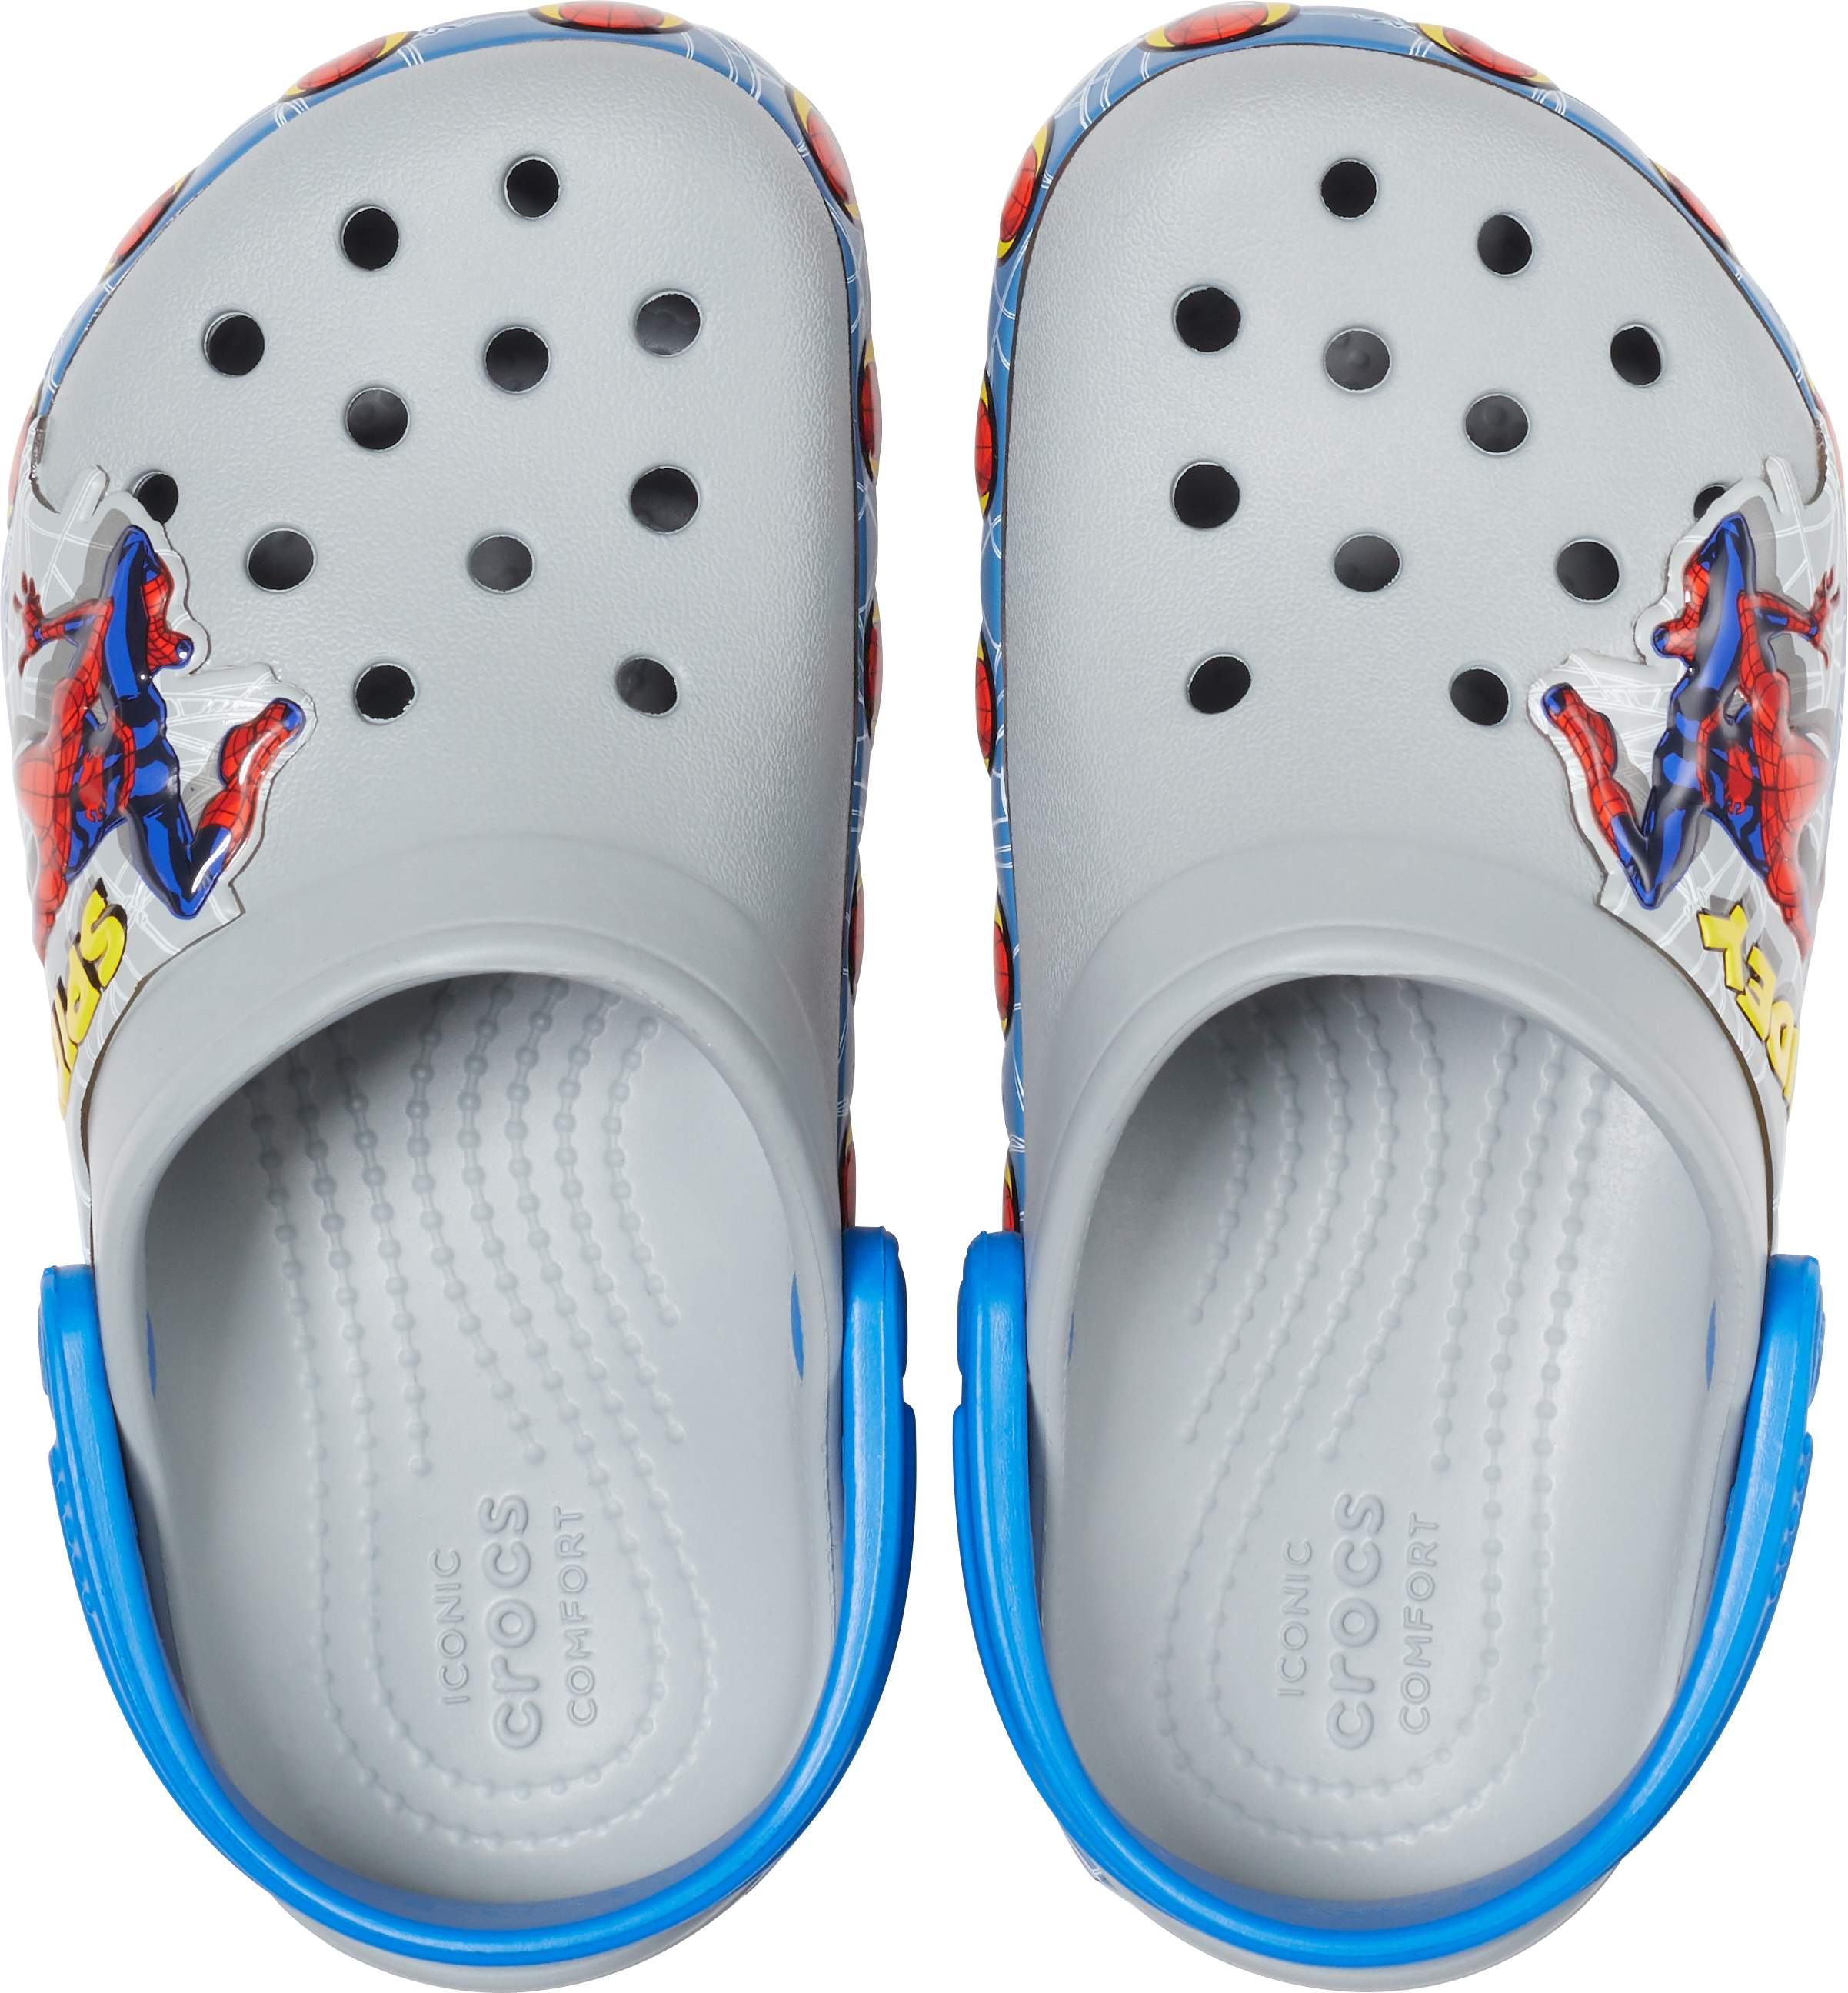 spider crocs